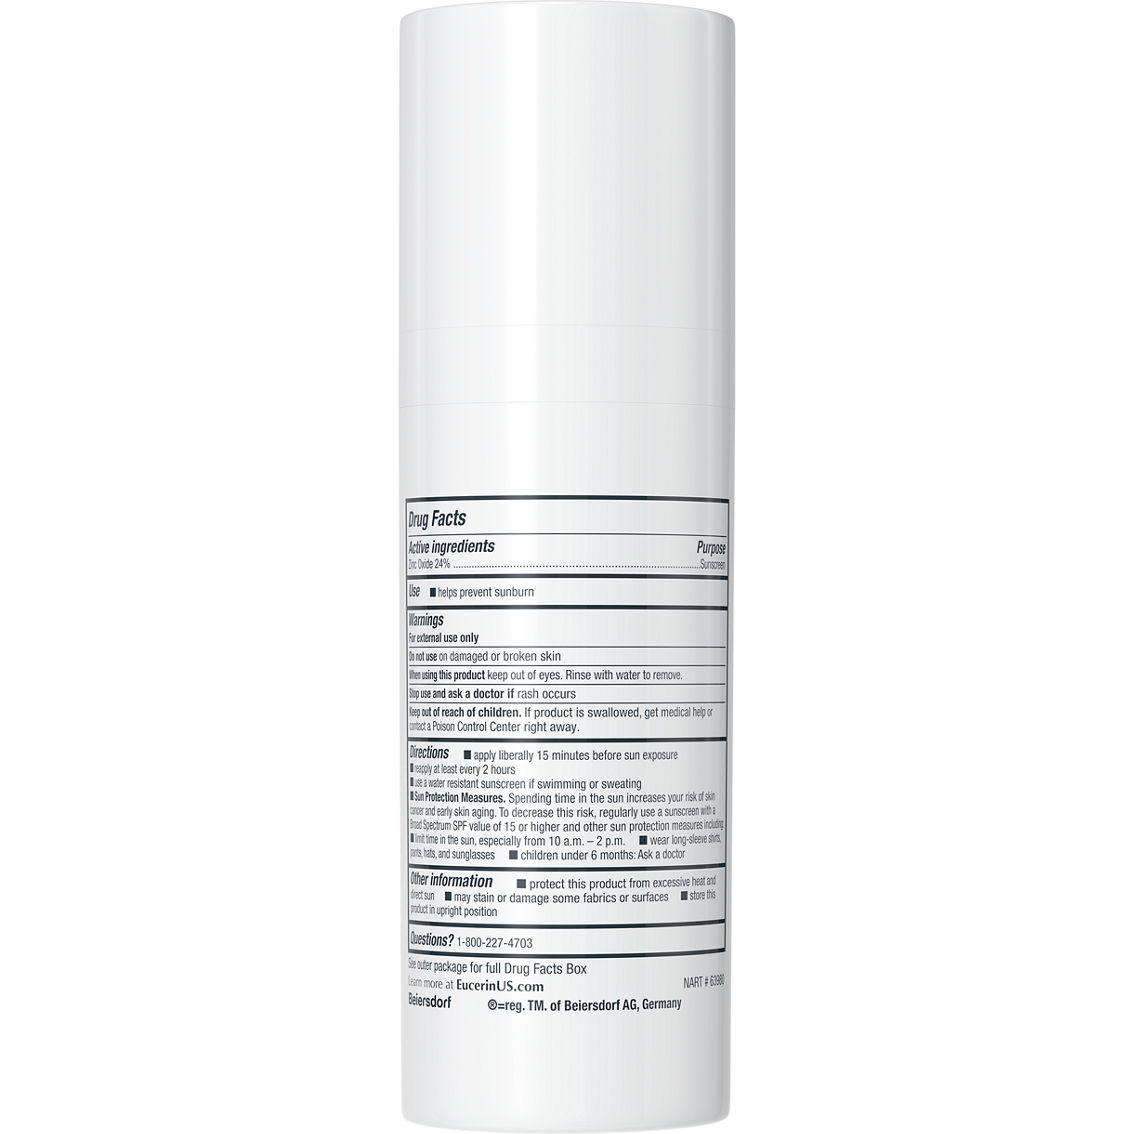 Eucerin Tinted Sensitive Mineral SPF 35 Face Sunscreen, 1.7 oz. - Image 3 of 4